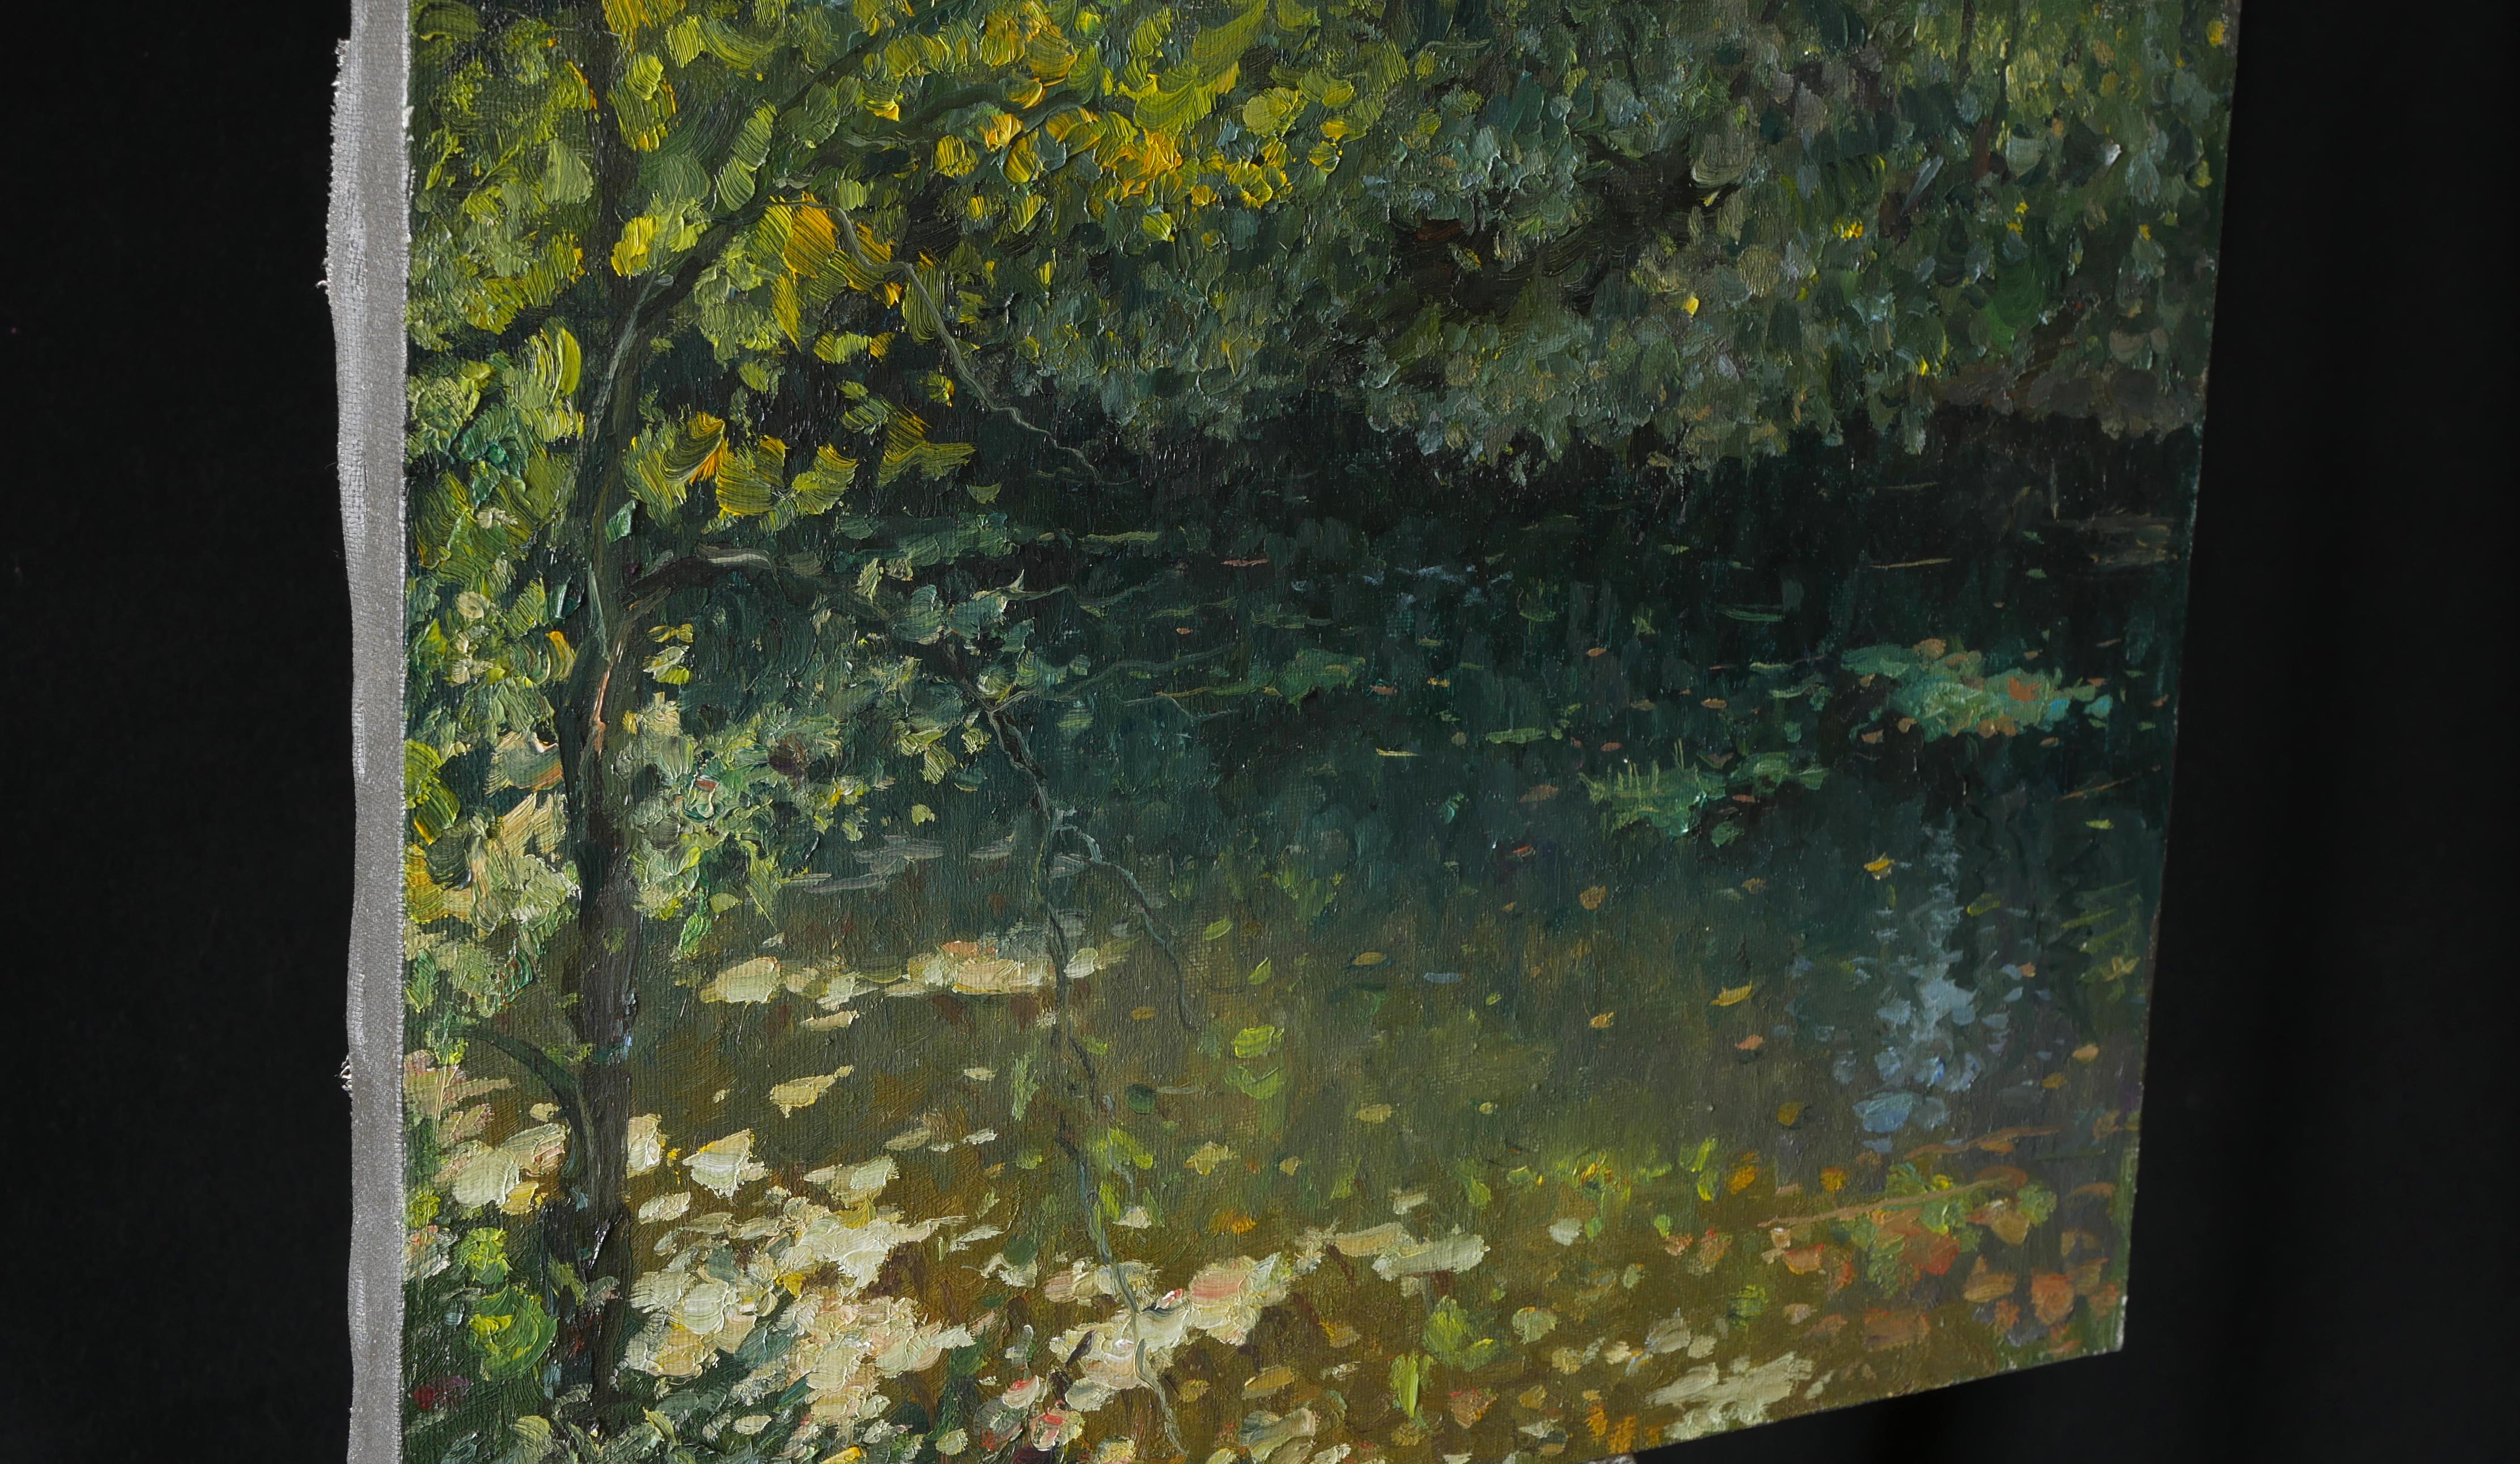 The Sunny Water - peinture de paysage fluvial - Impressionnisme Painting par Nikolay Dmitriev